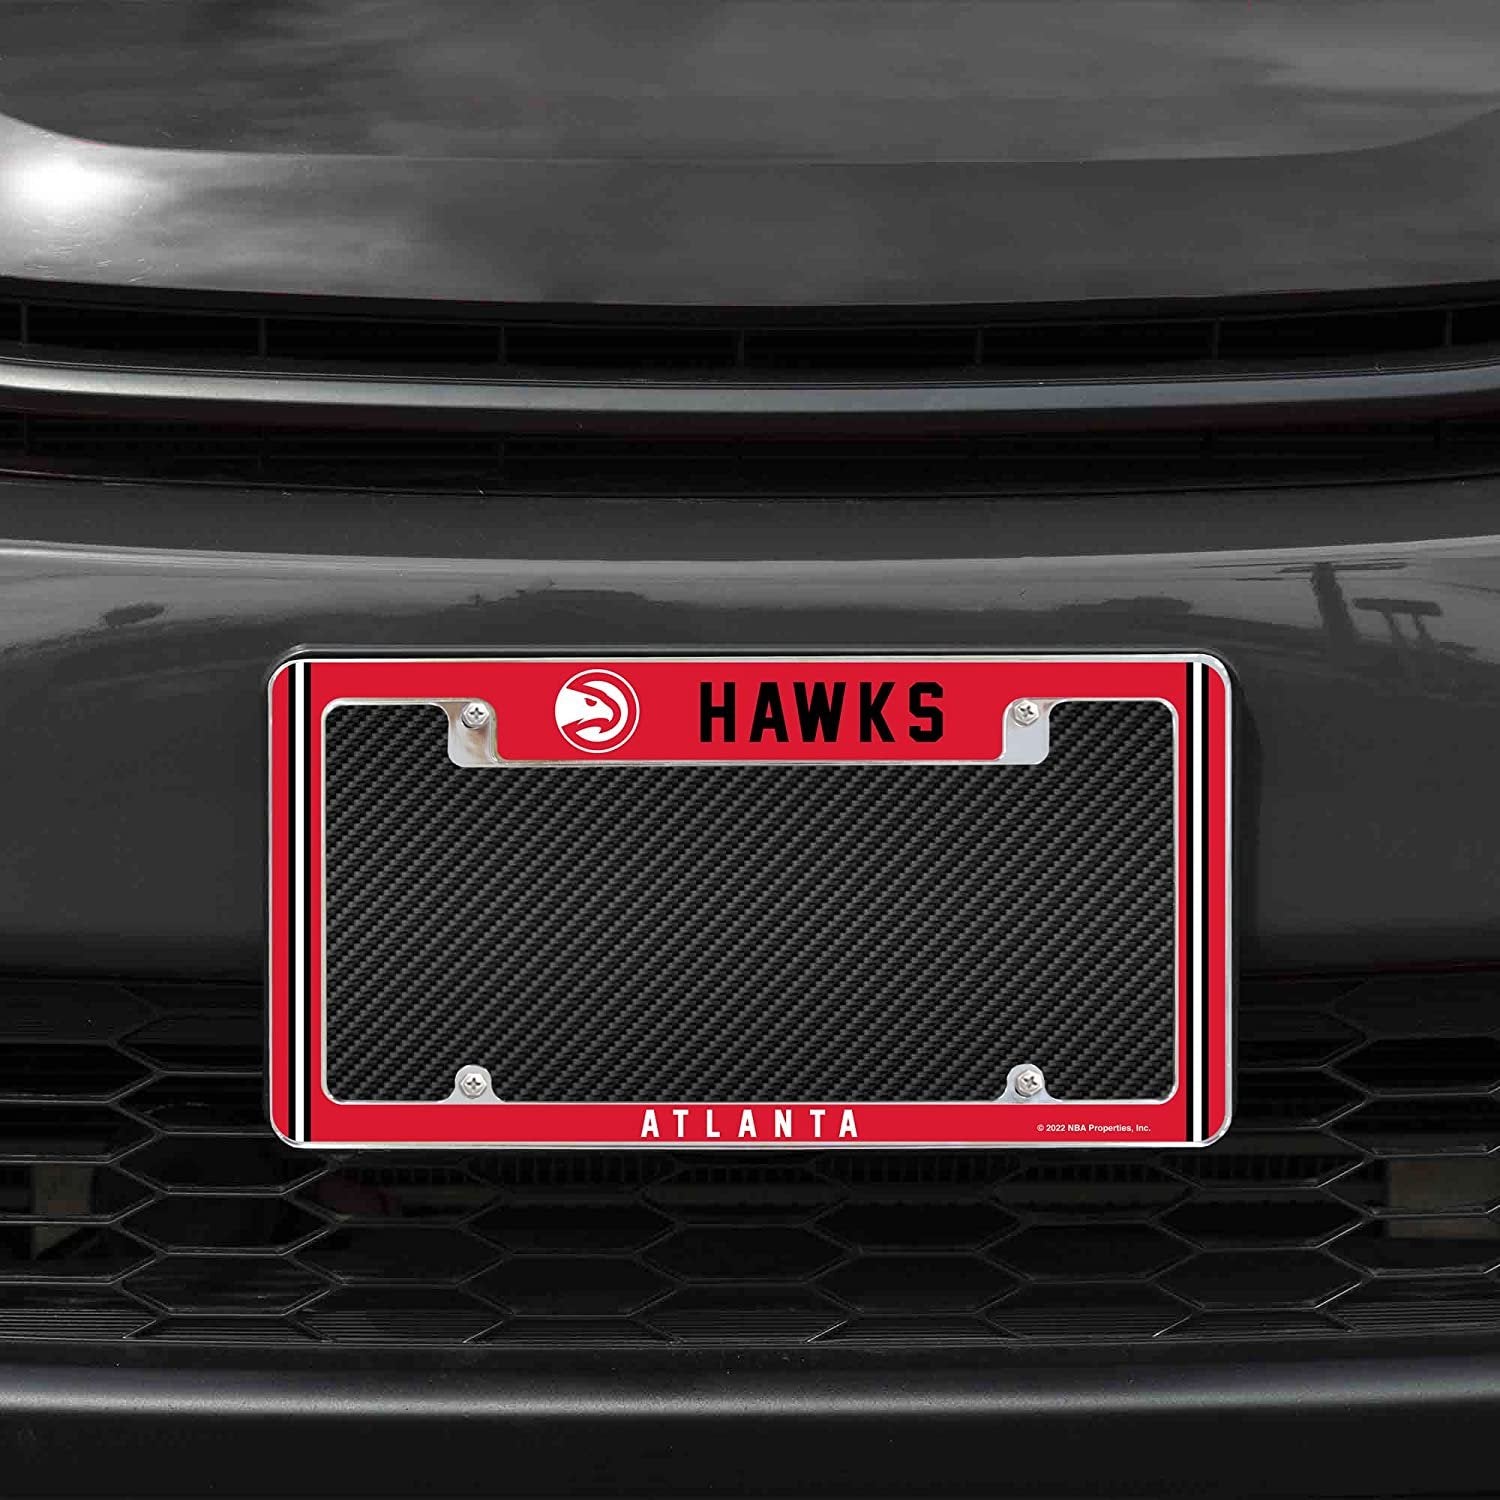 Atlanta Hawks Metal License Plate Frame Chrome Tag Cover Alternate Design 6x12 Inch